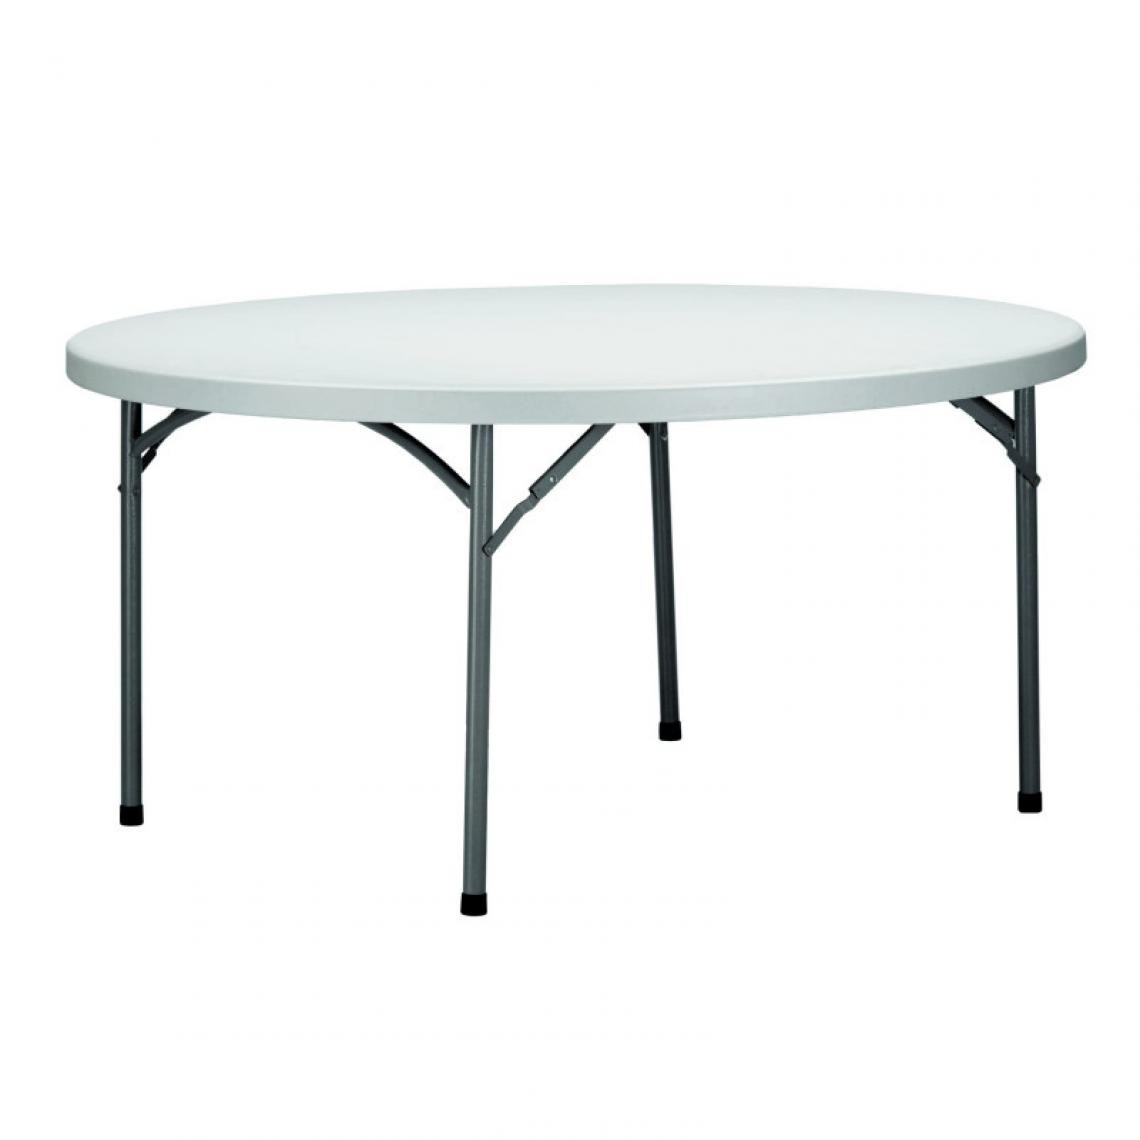 Resol - Table Mozart Ø200 - RESOL - polyéthylène, acier peint - Tables à manger